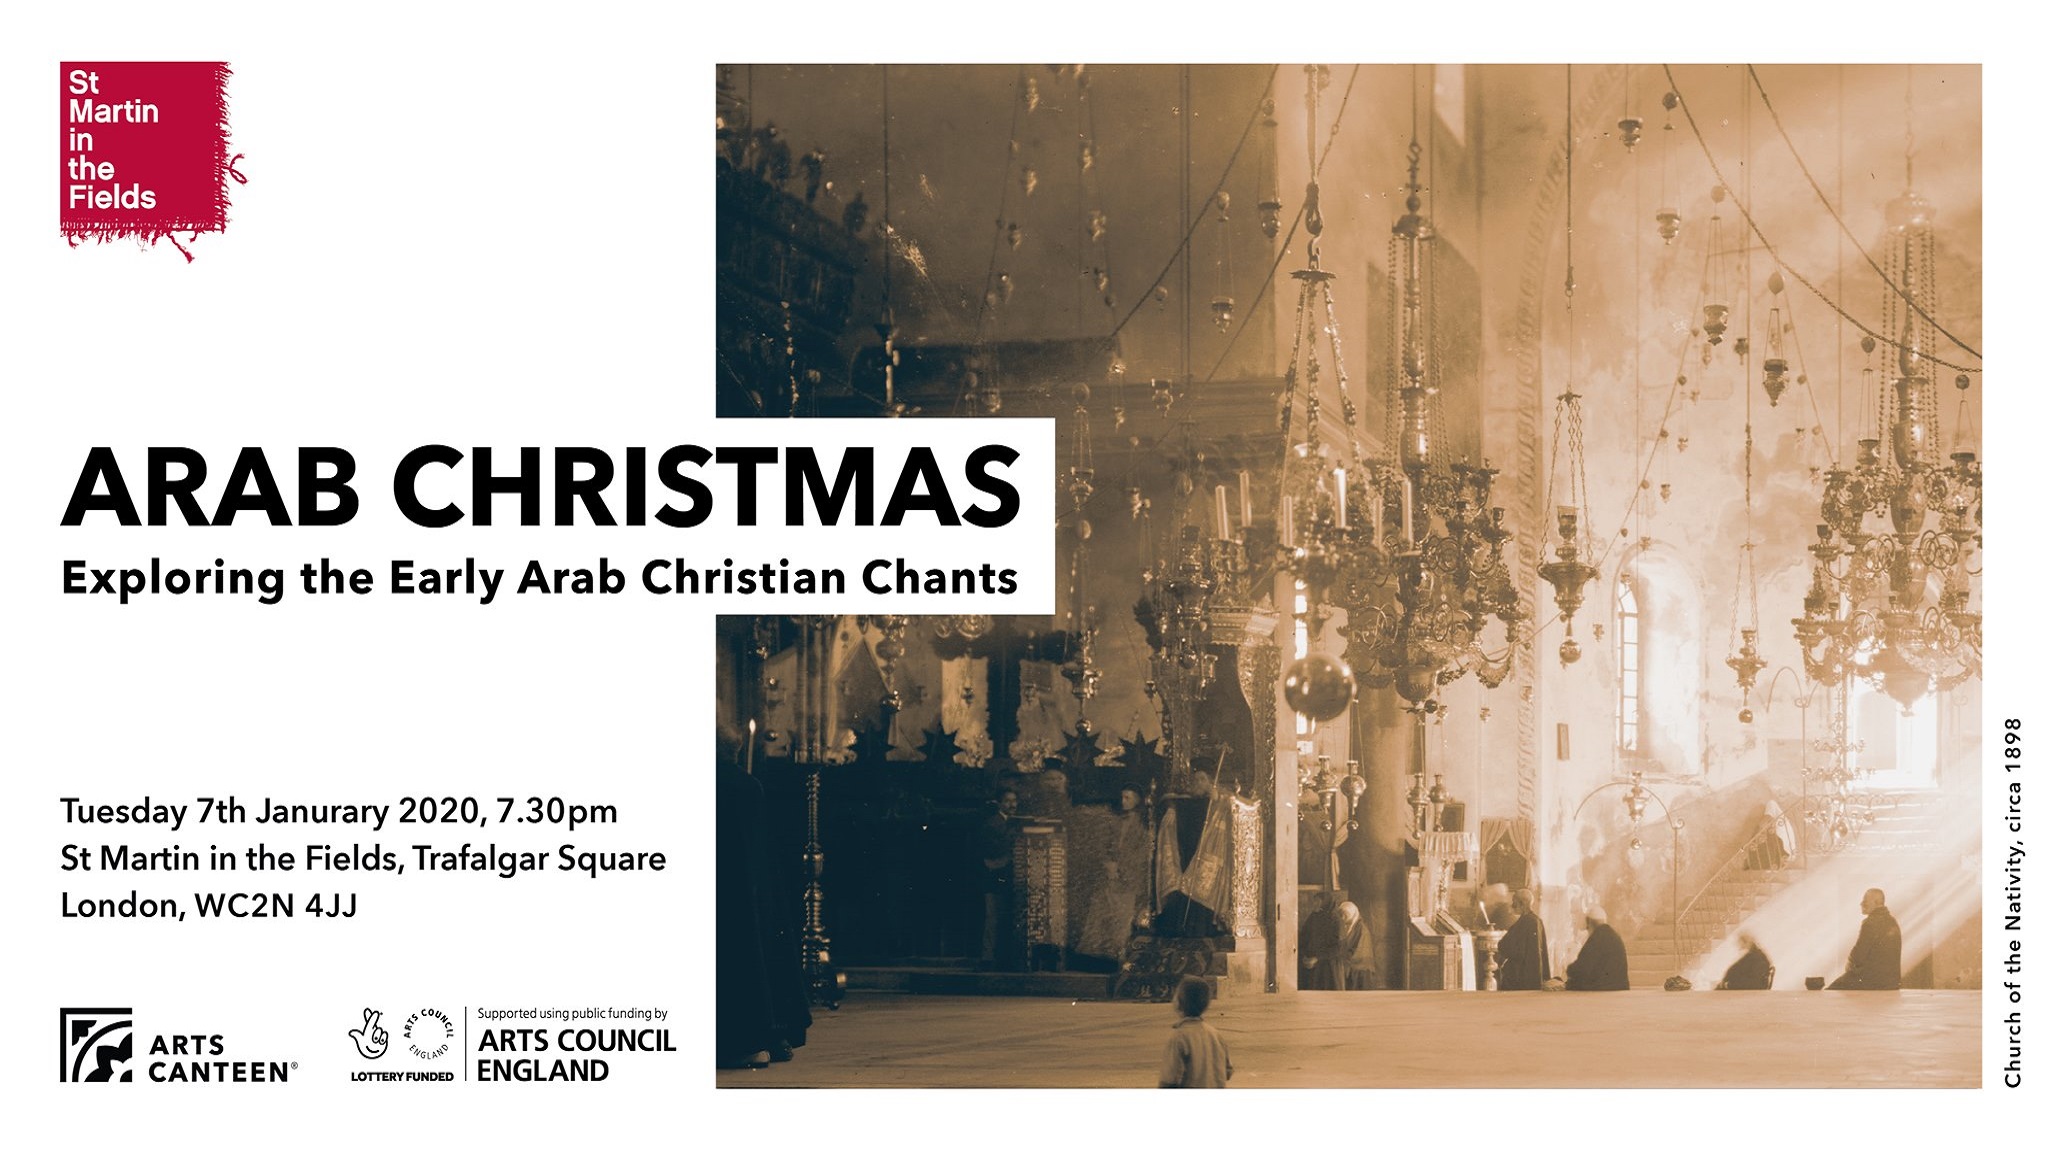 Arab Christmas in London